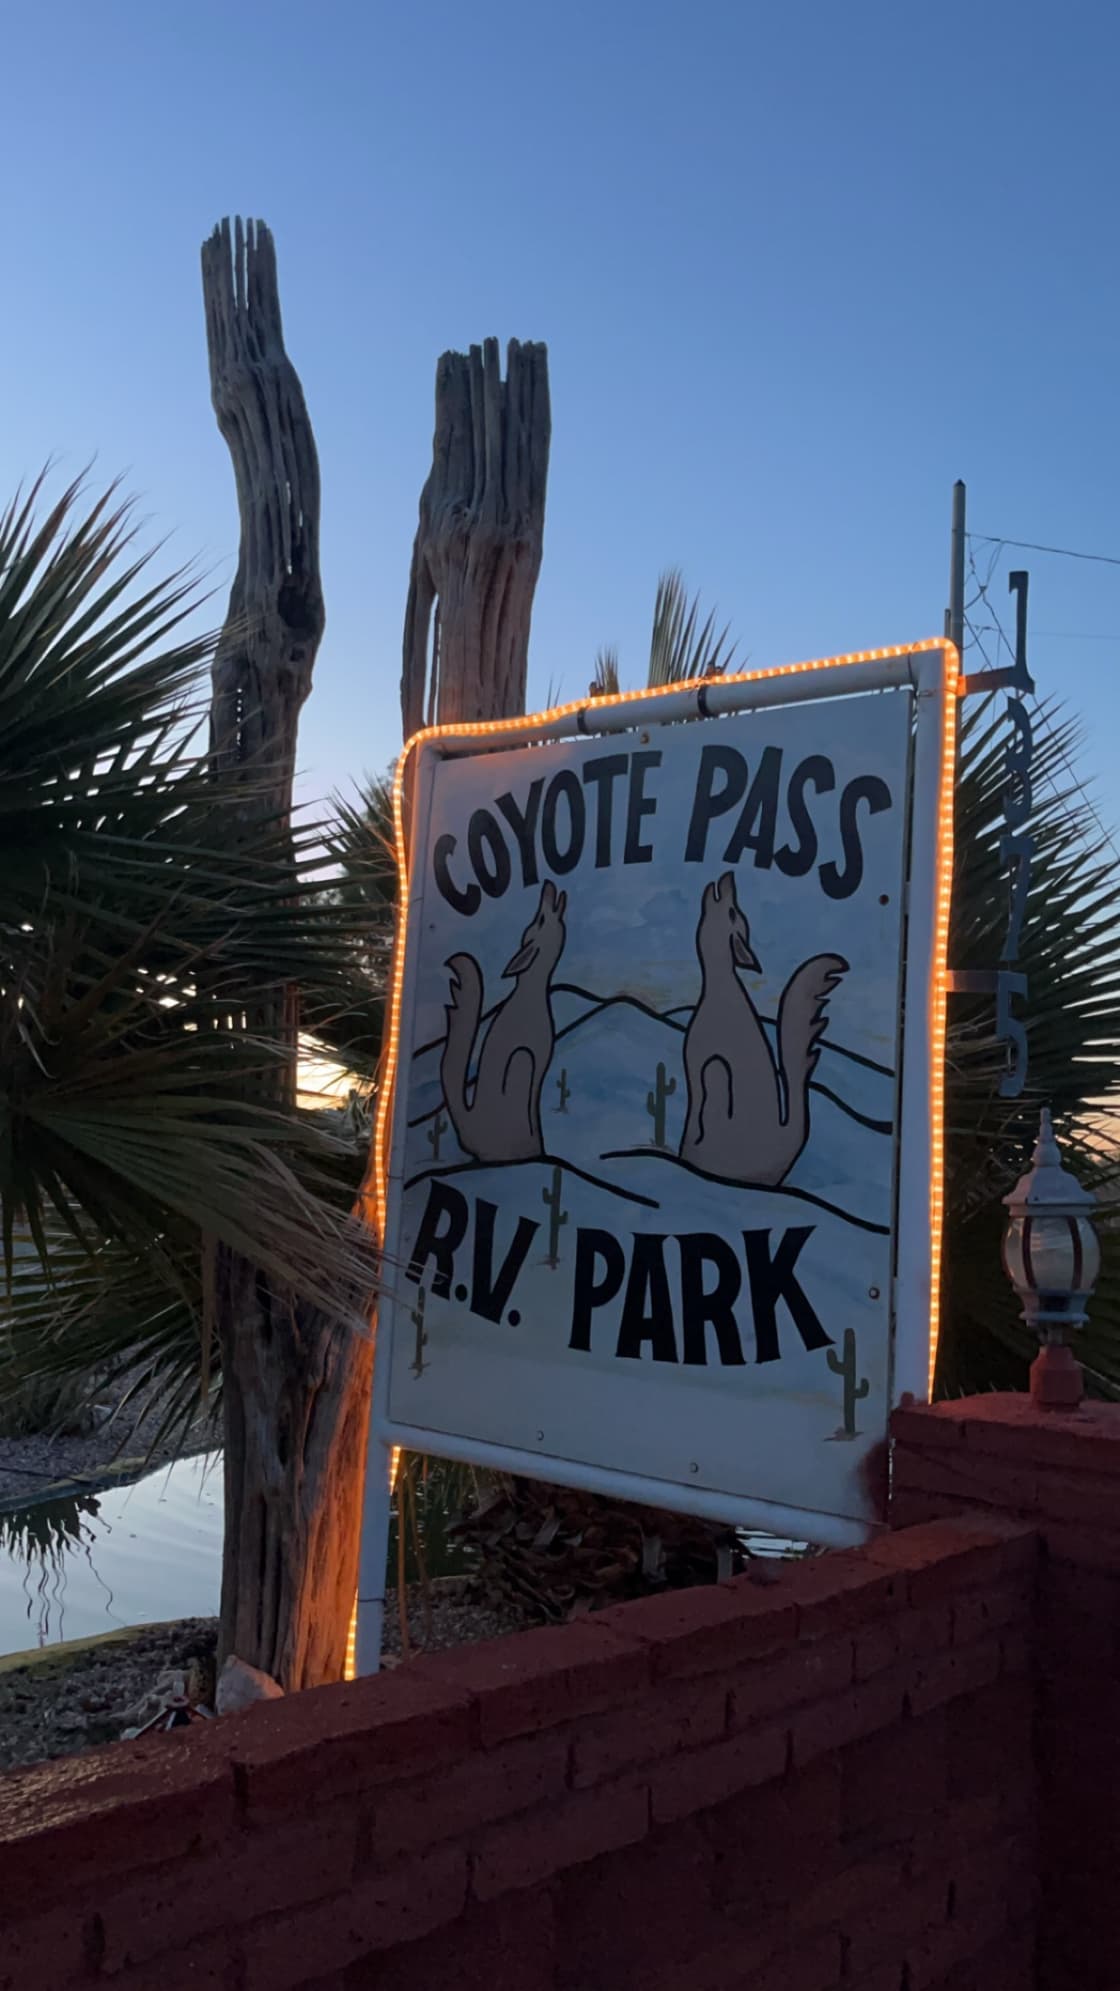 Coyote Pass RV Park